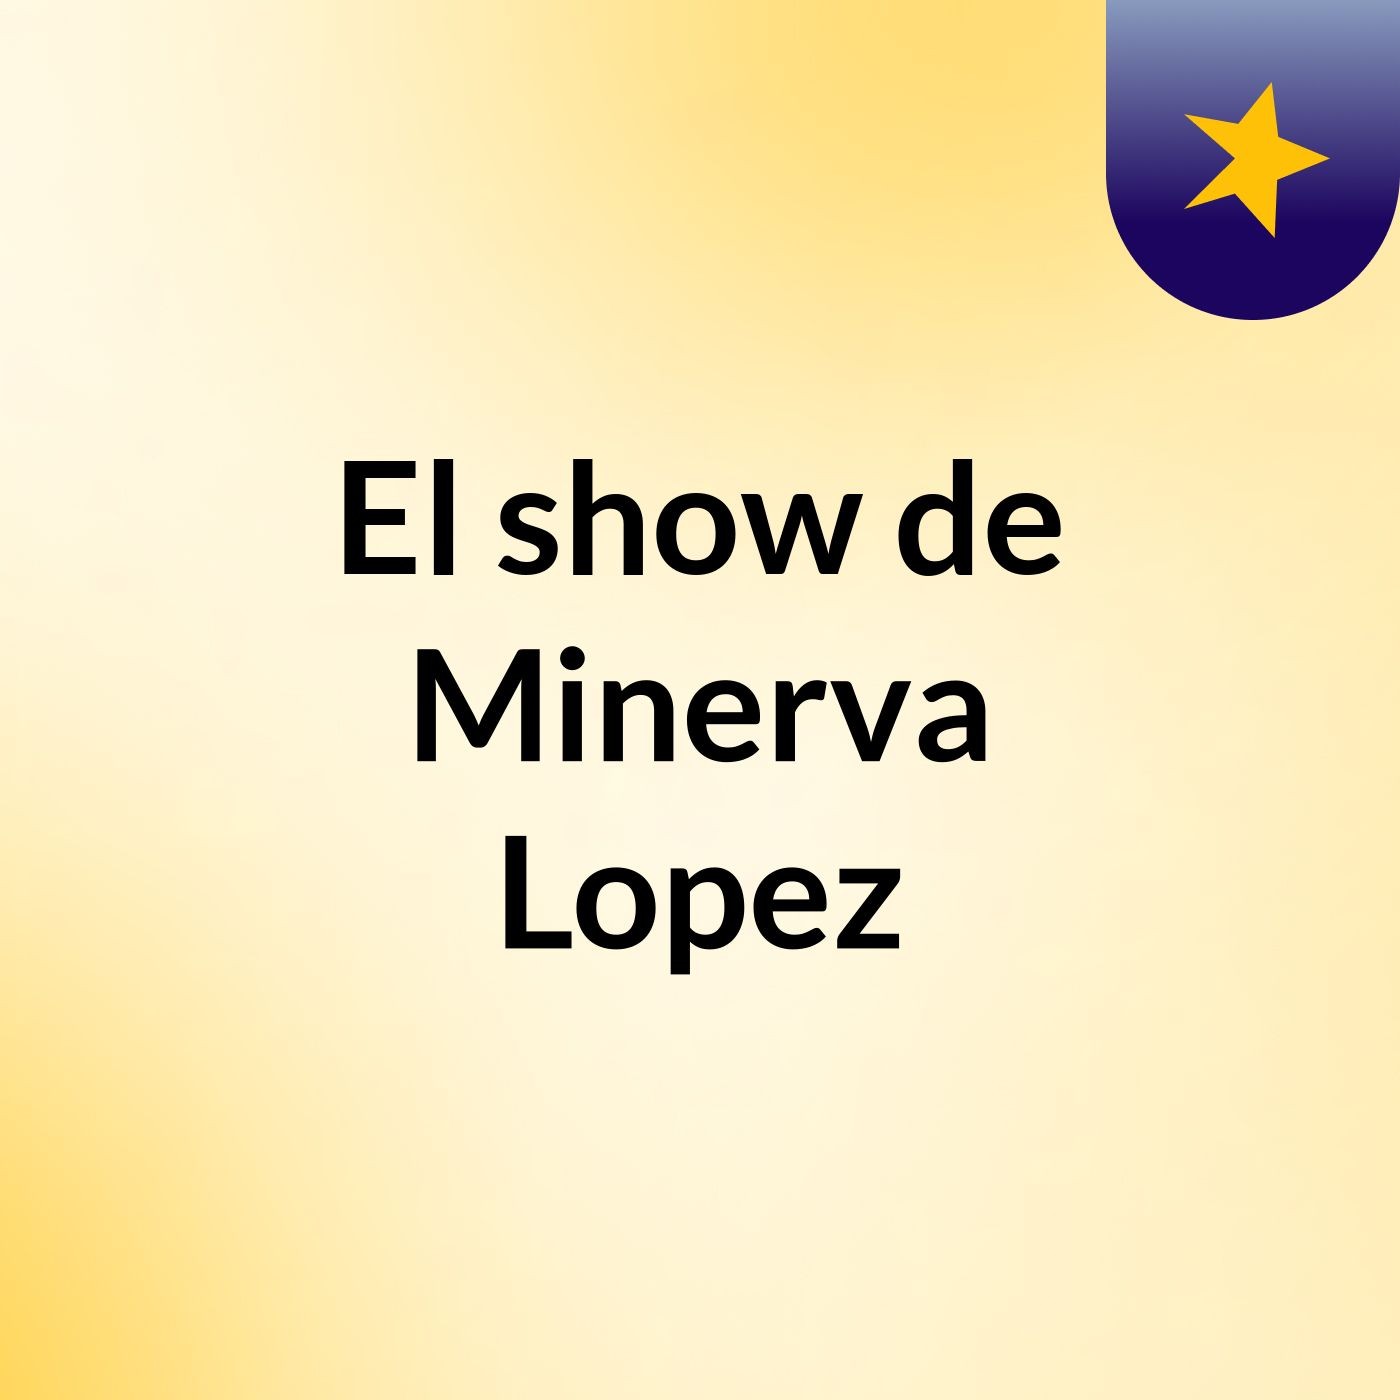 El show de Minerva Lopez